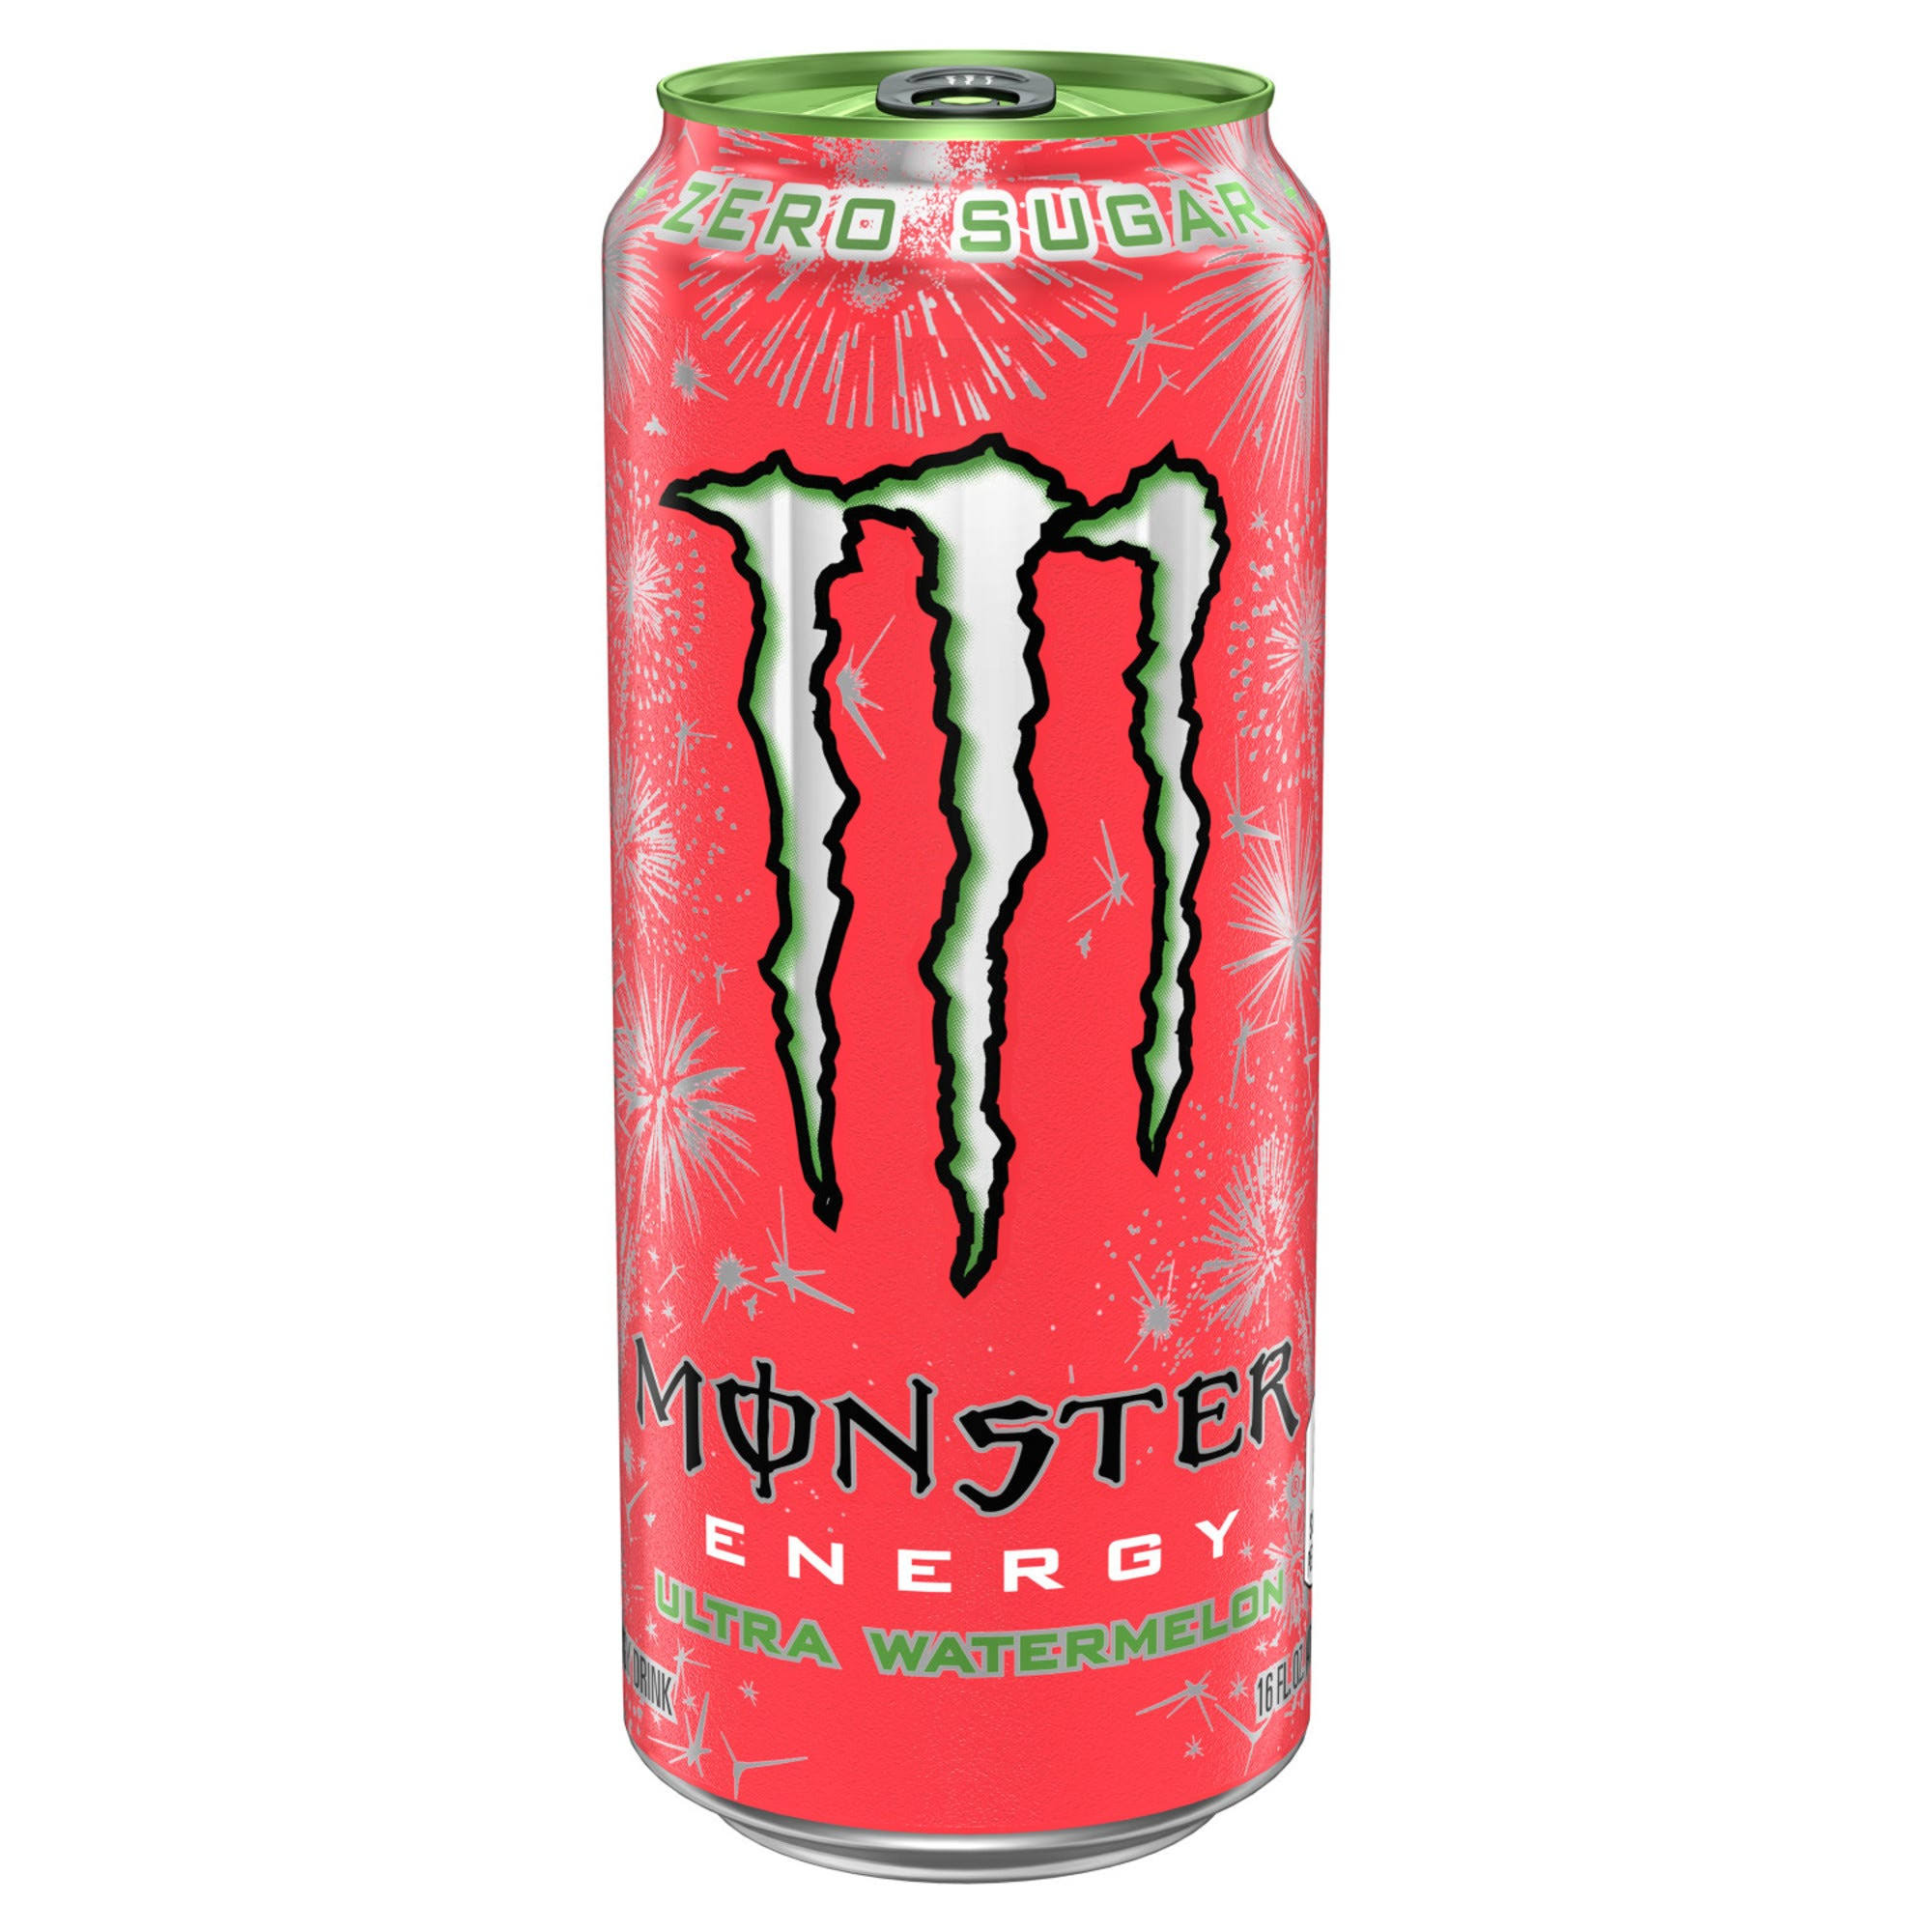 Monster Energy Drink, Ultra Watermelon, Zero Sugar - 16 fl oz